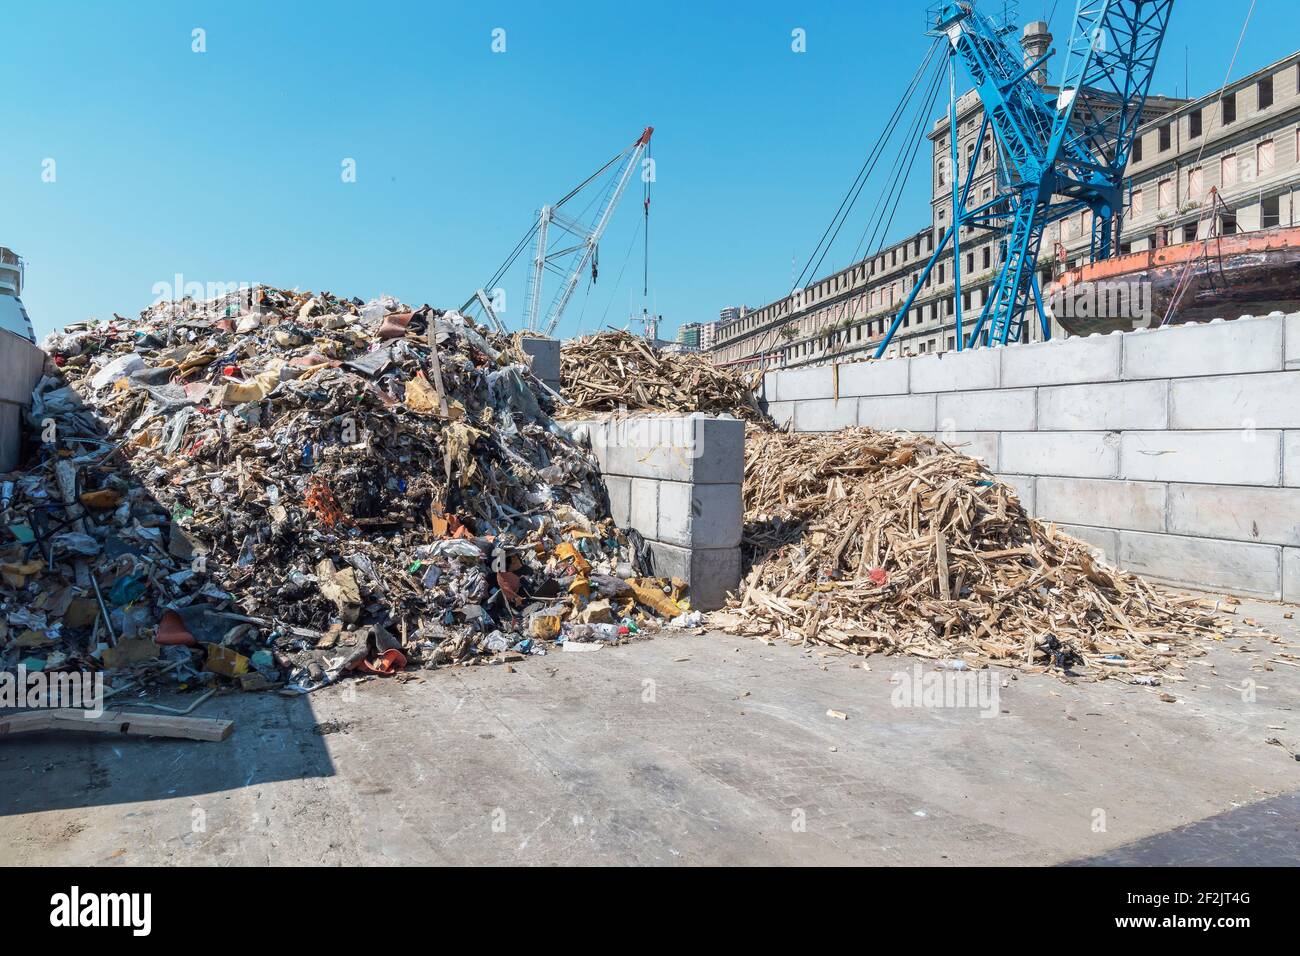 Waste collection centre, Genoa, Liguria, Italy, Europe Stock Photo